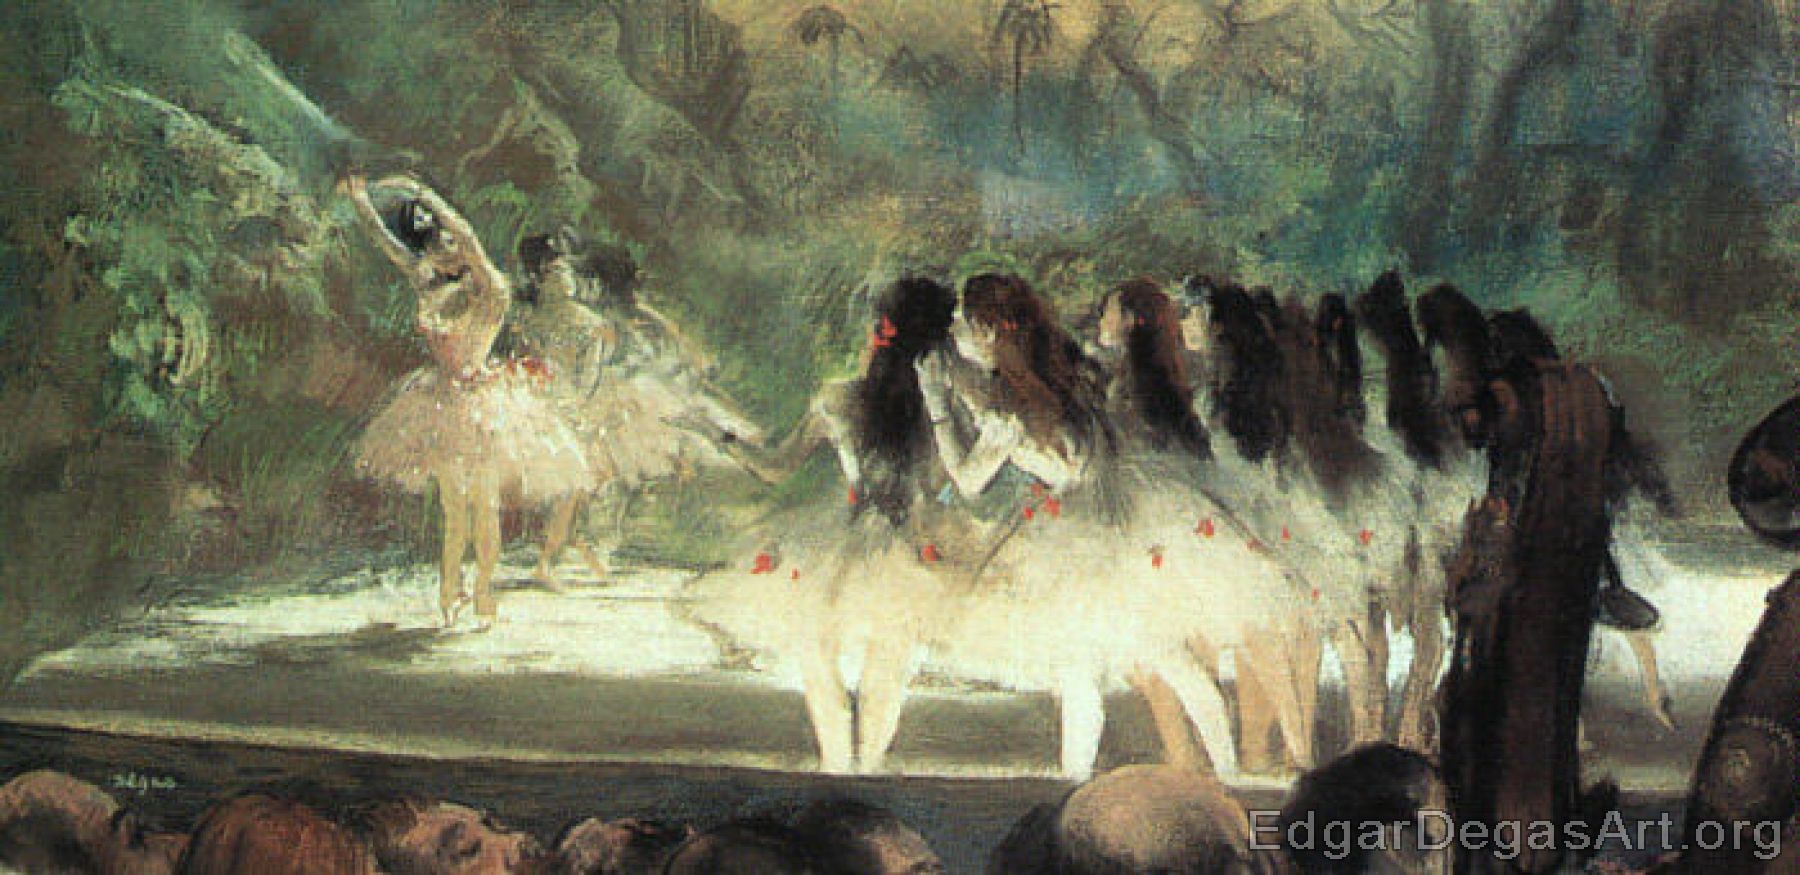 Ballet at the Paris Opera